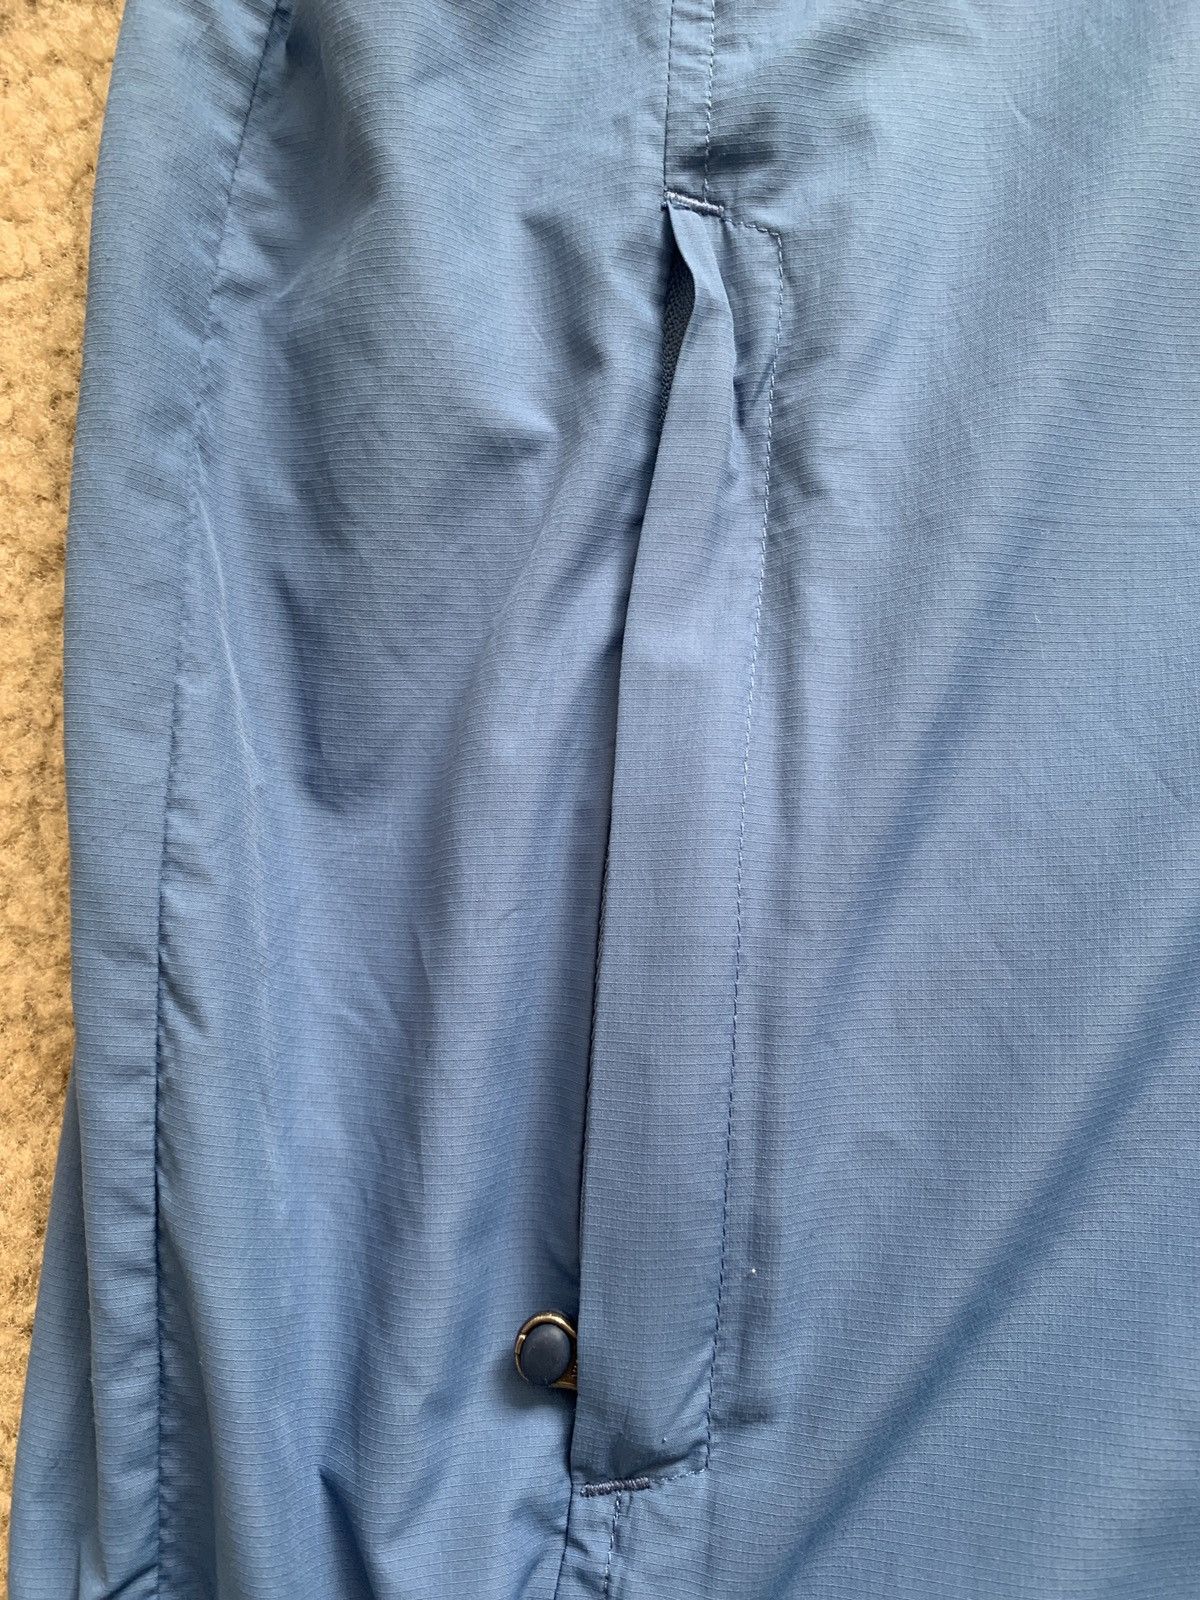 Rei Rei Raincoat Jacket (Blue) Size US S / EU 44-46 / 1 - 3 Thumbnail